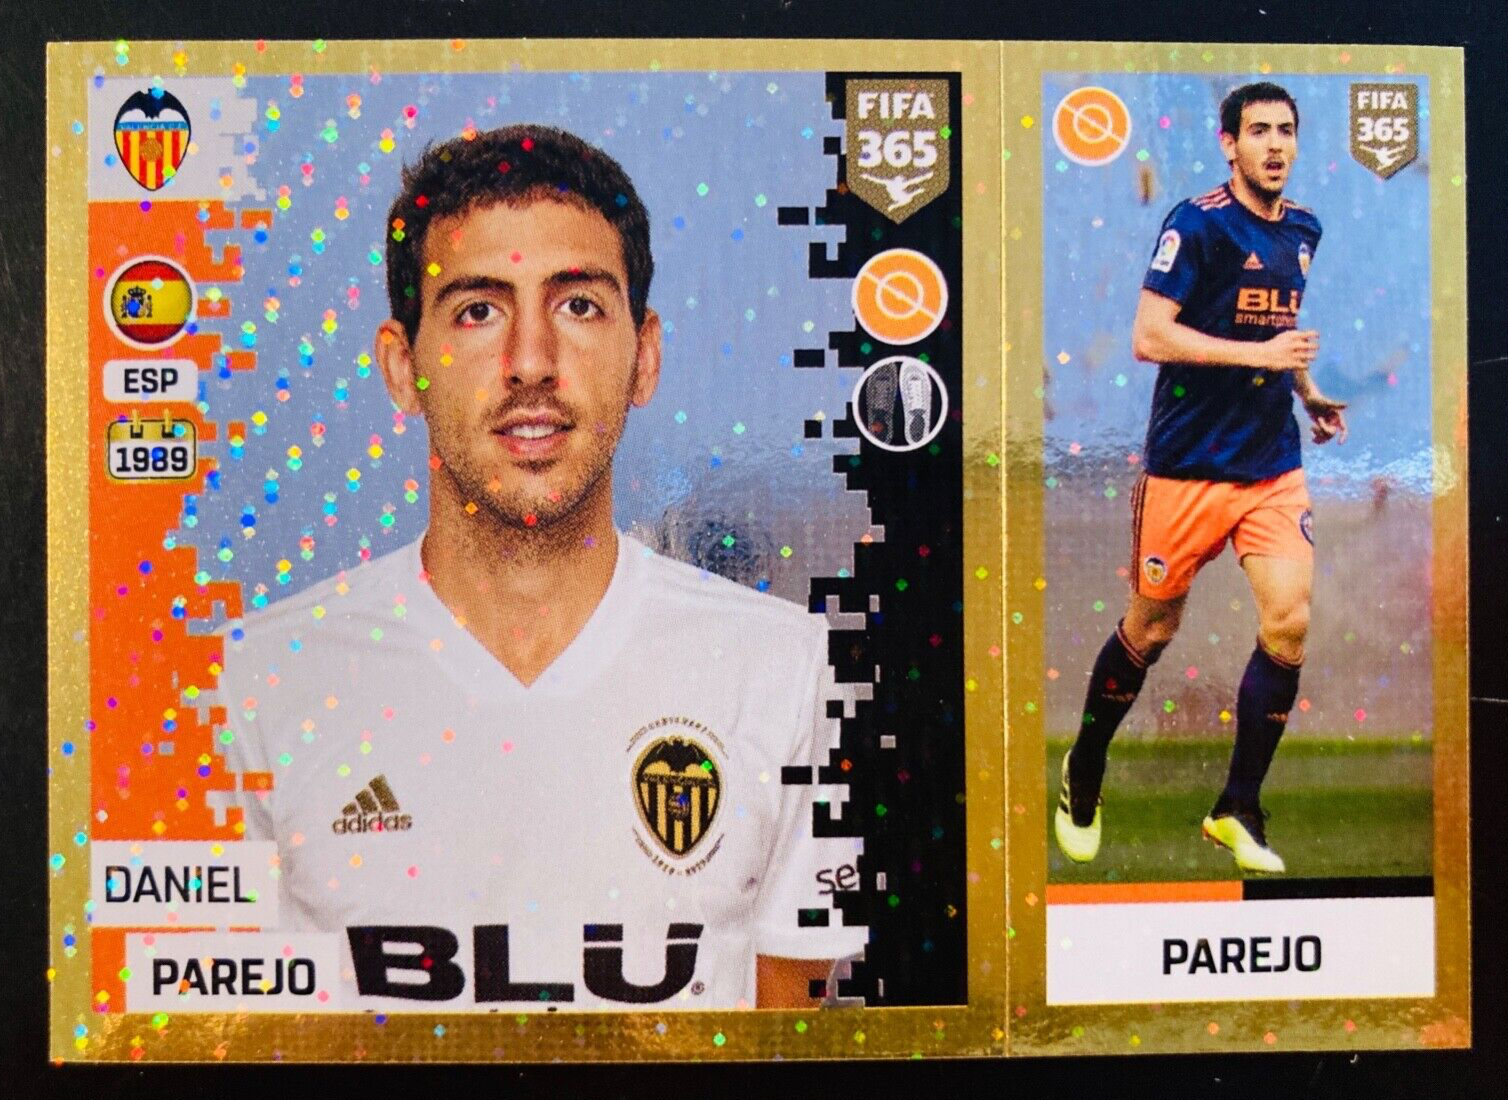 2018-19 Panini FIFA 365 Blue back # 98 Daniel Parejo Valencia gold foil  sticker | eBay